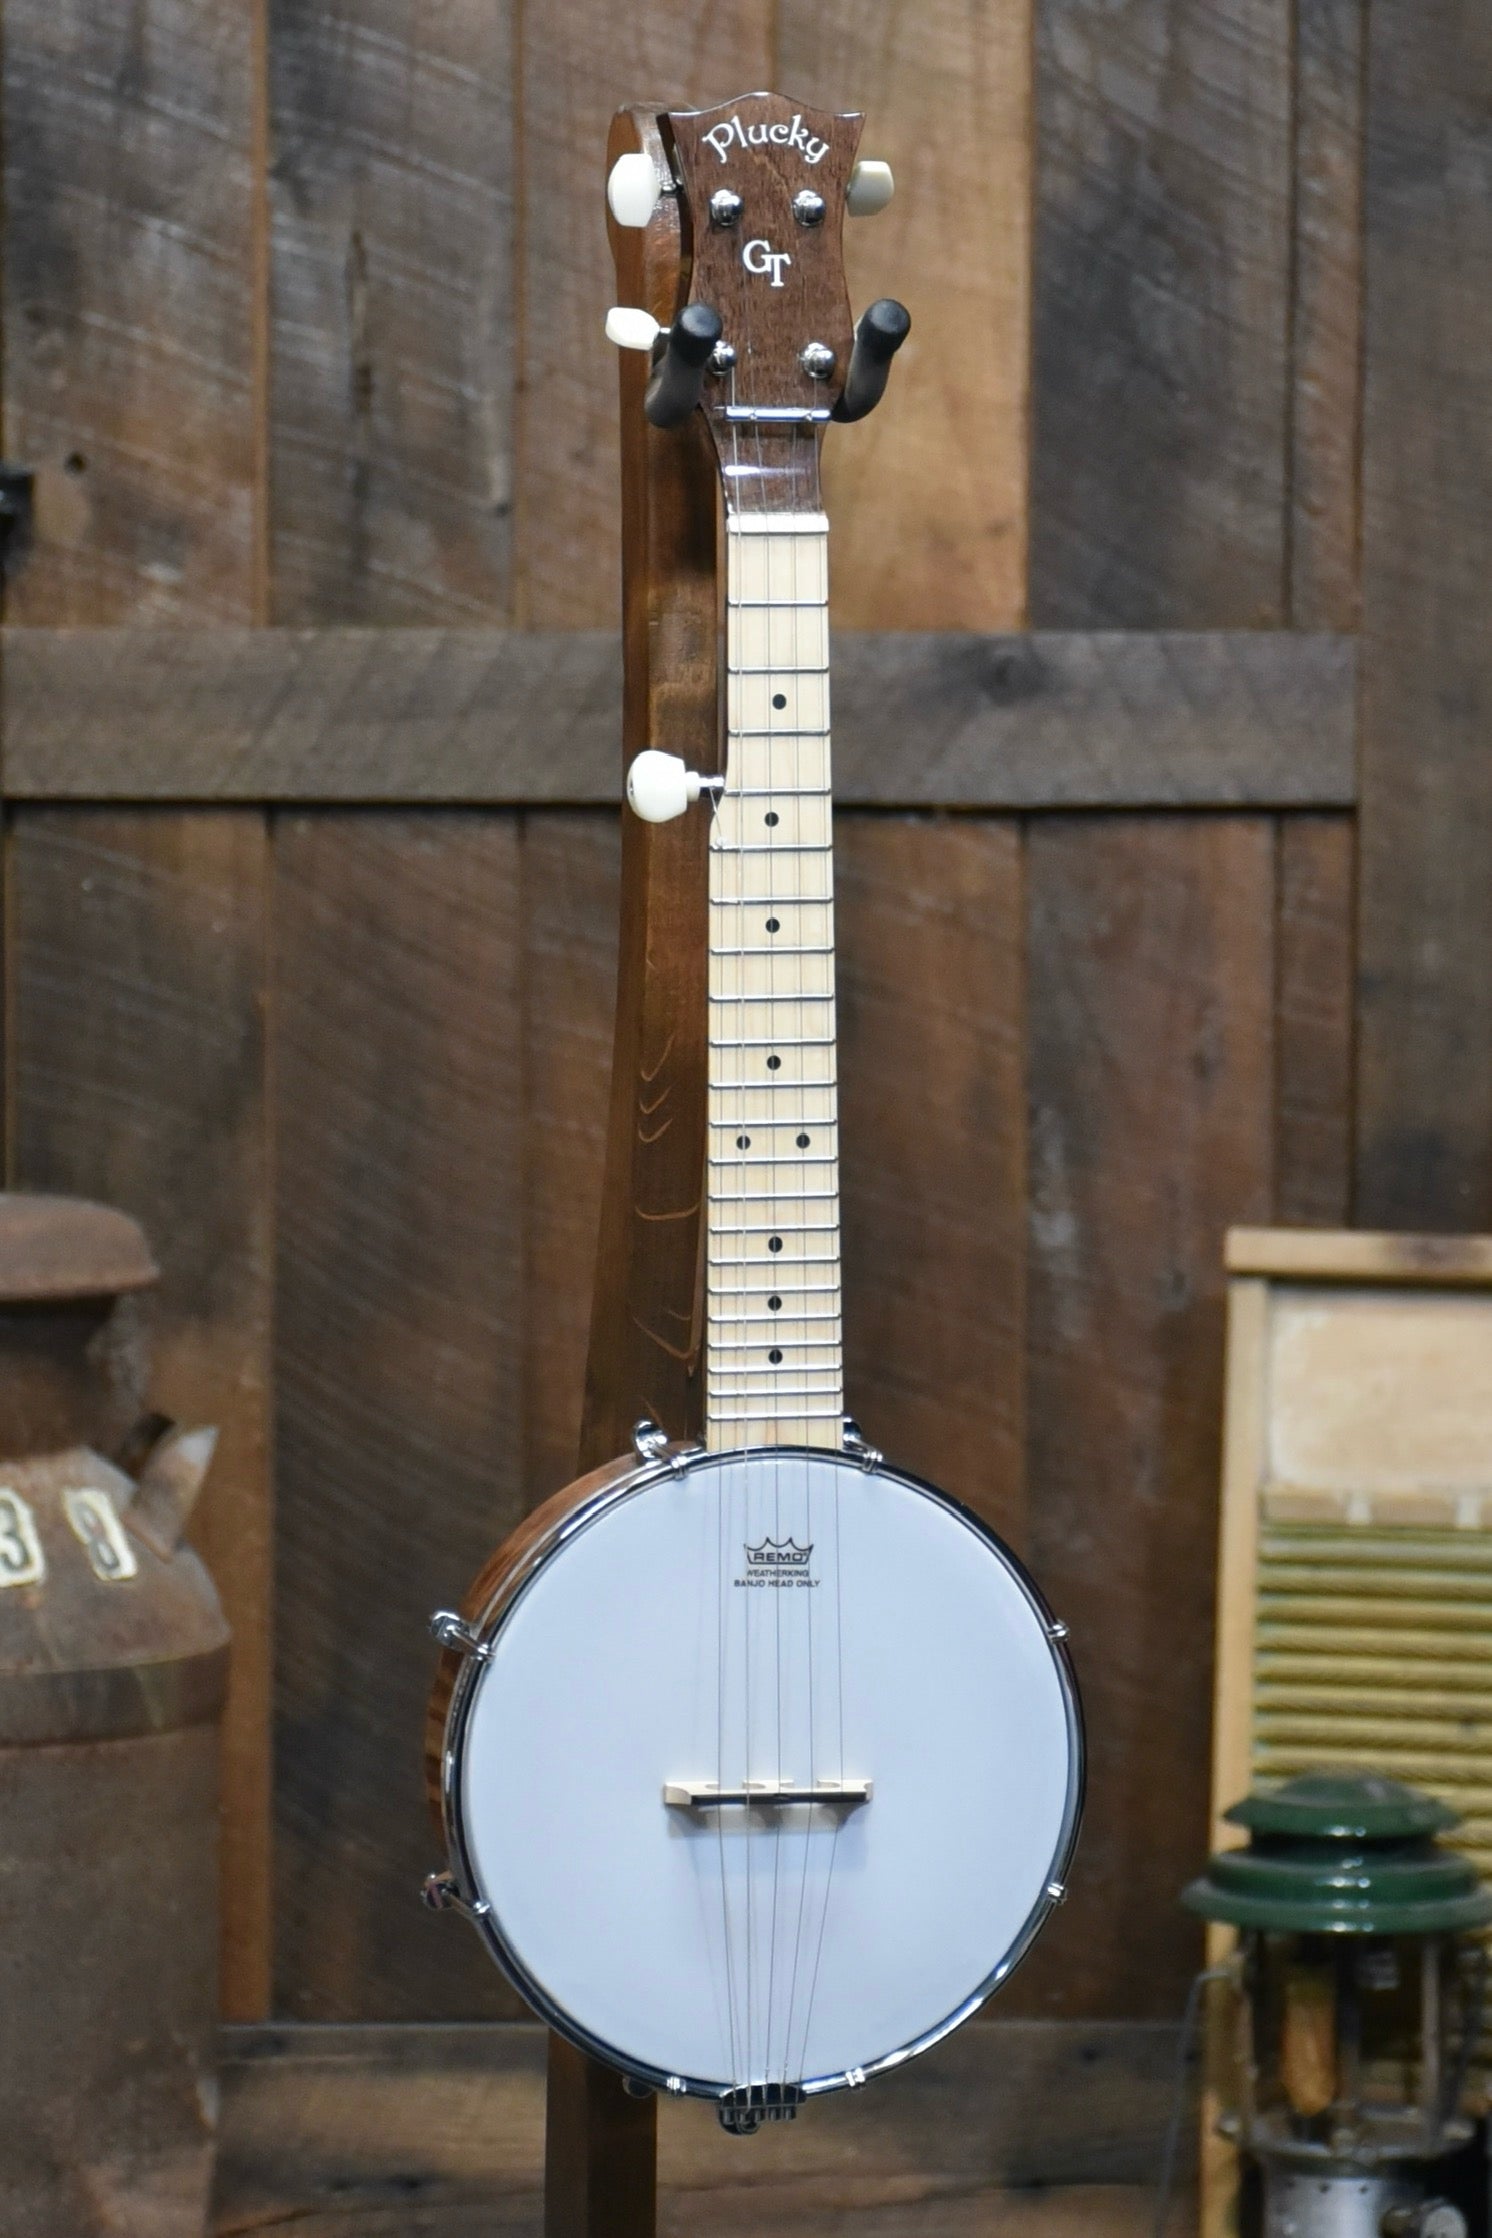 Lot - Vintage Toy Banjo